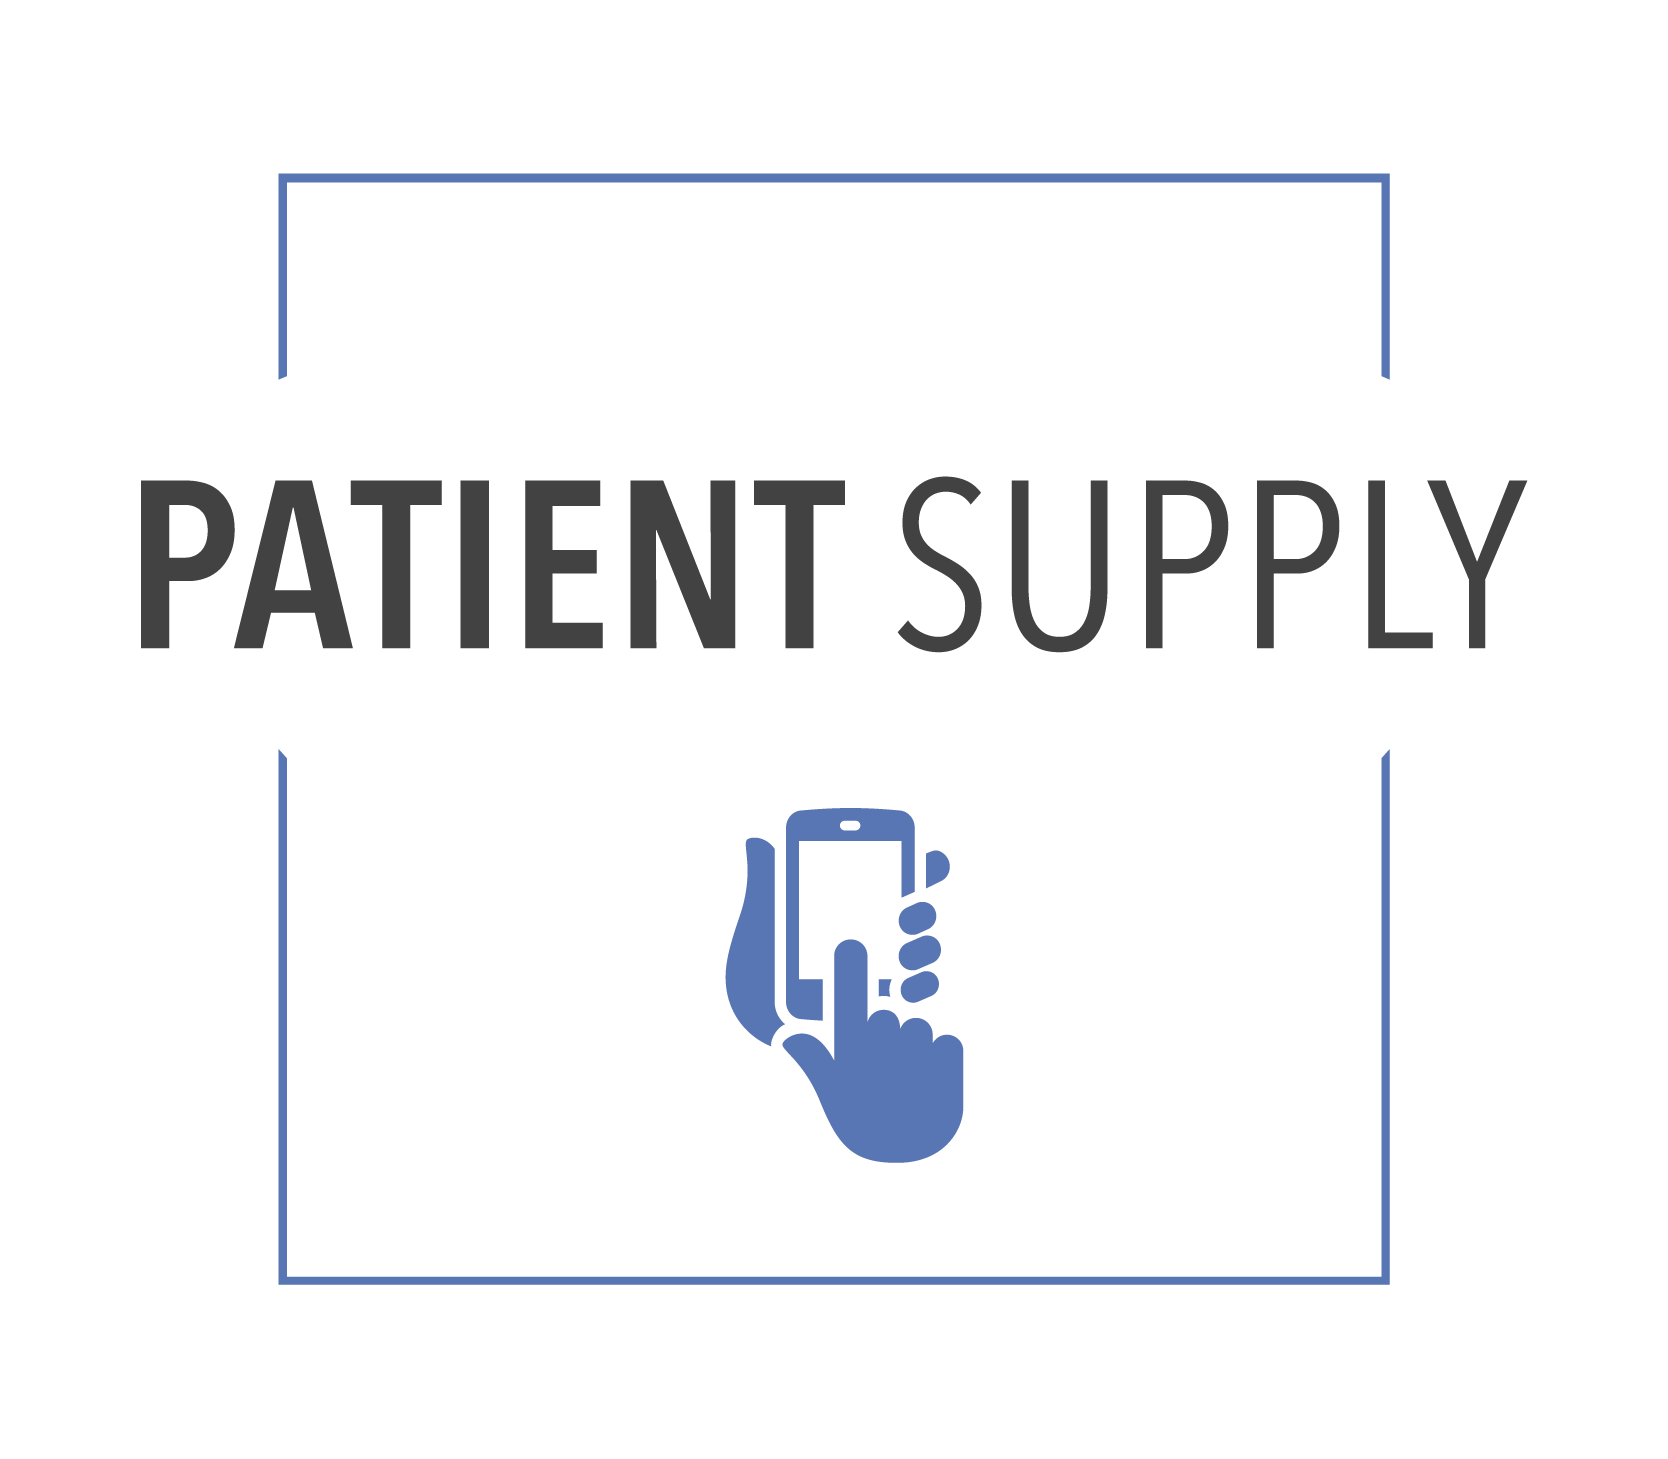 PatientSupply